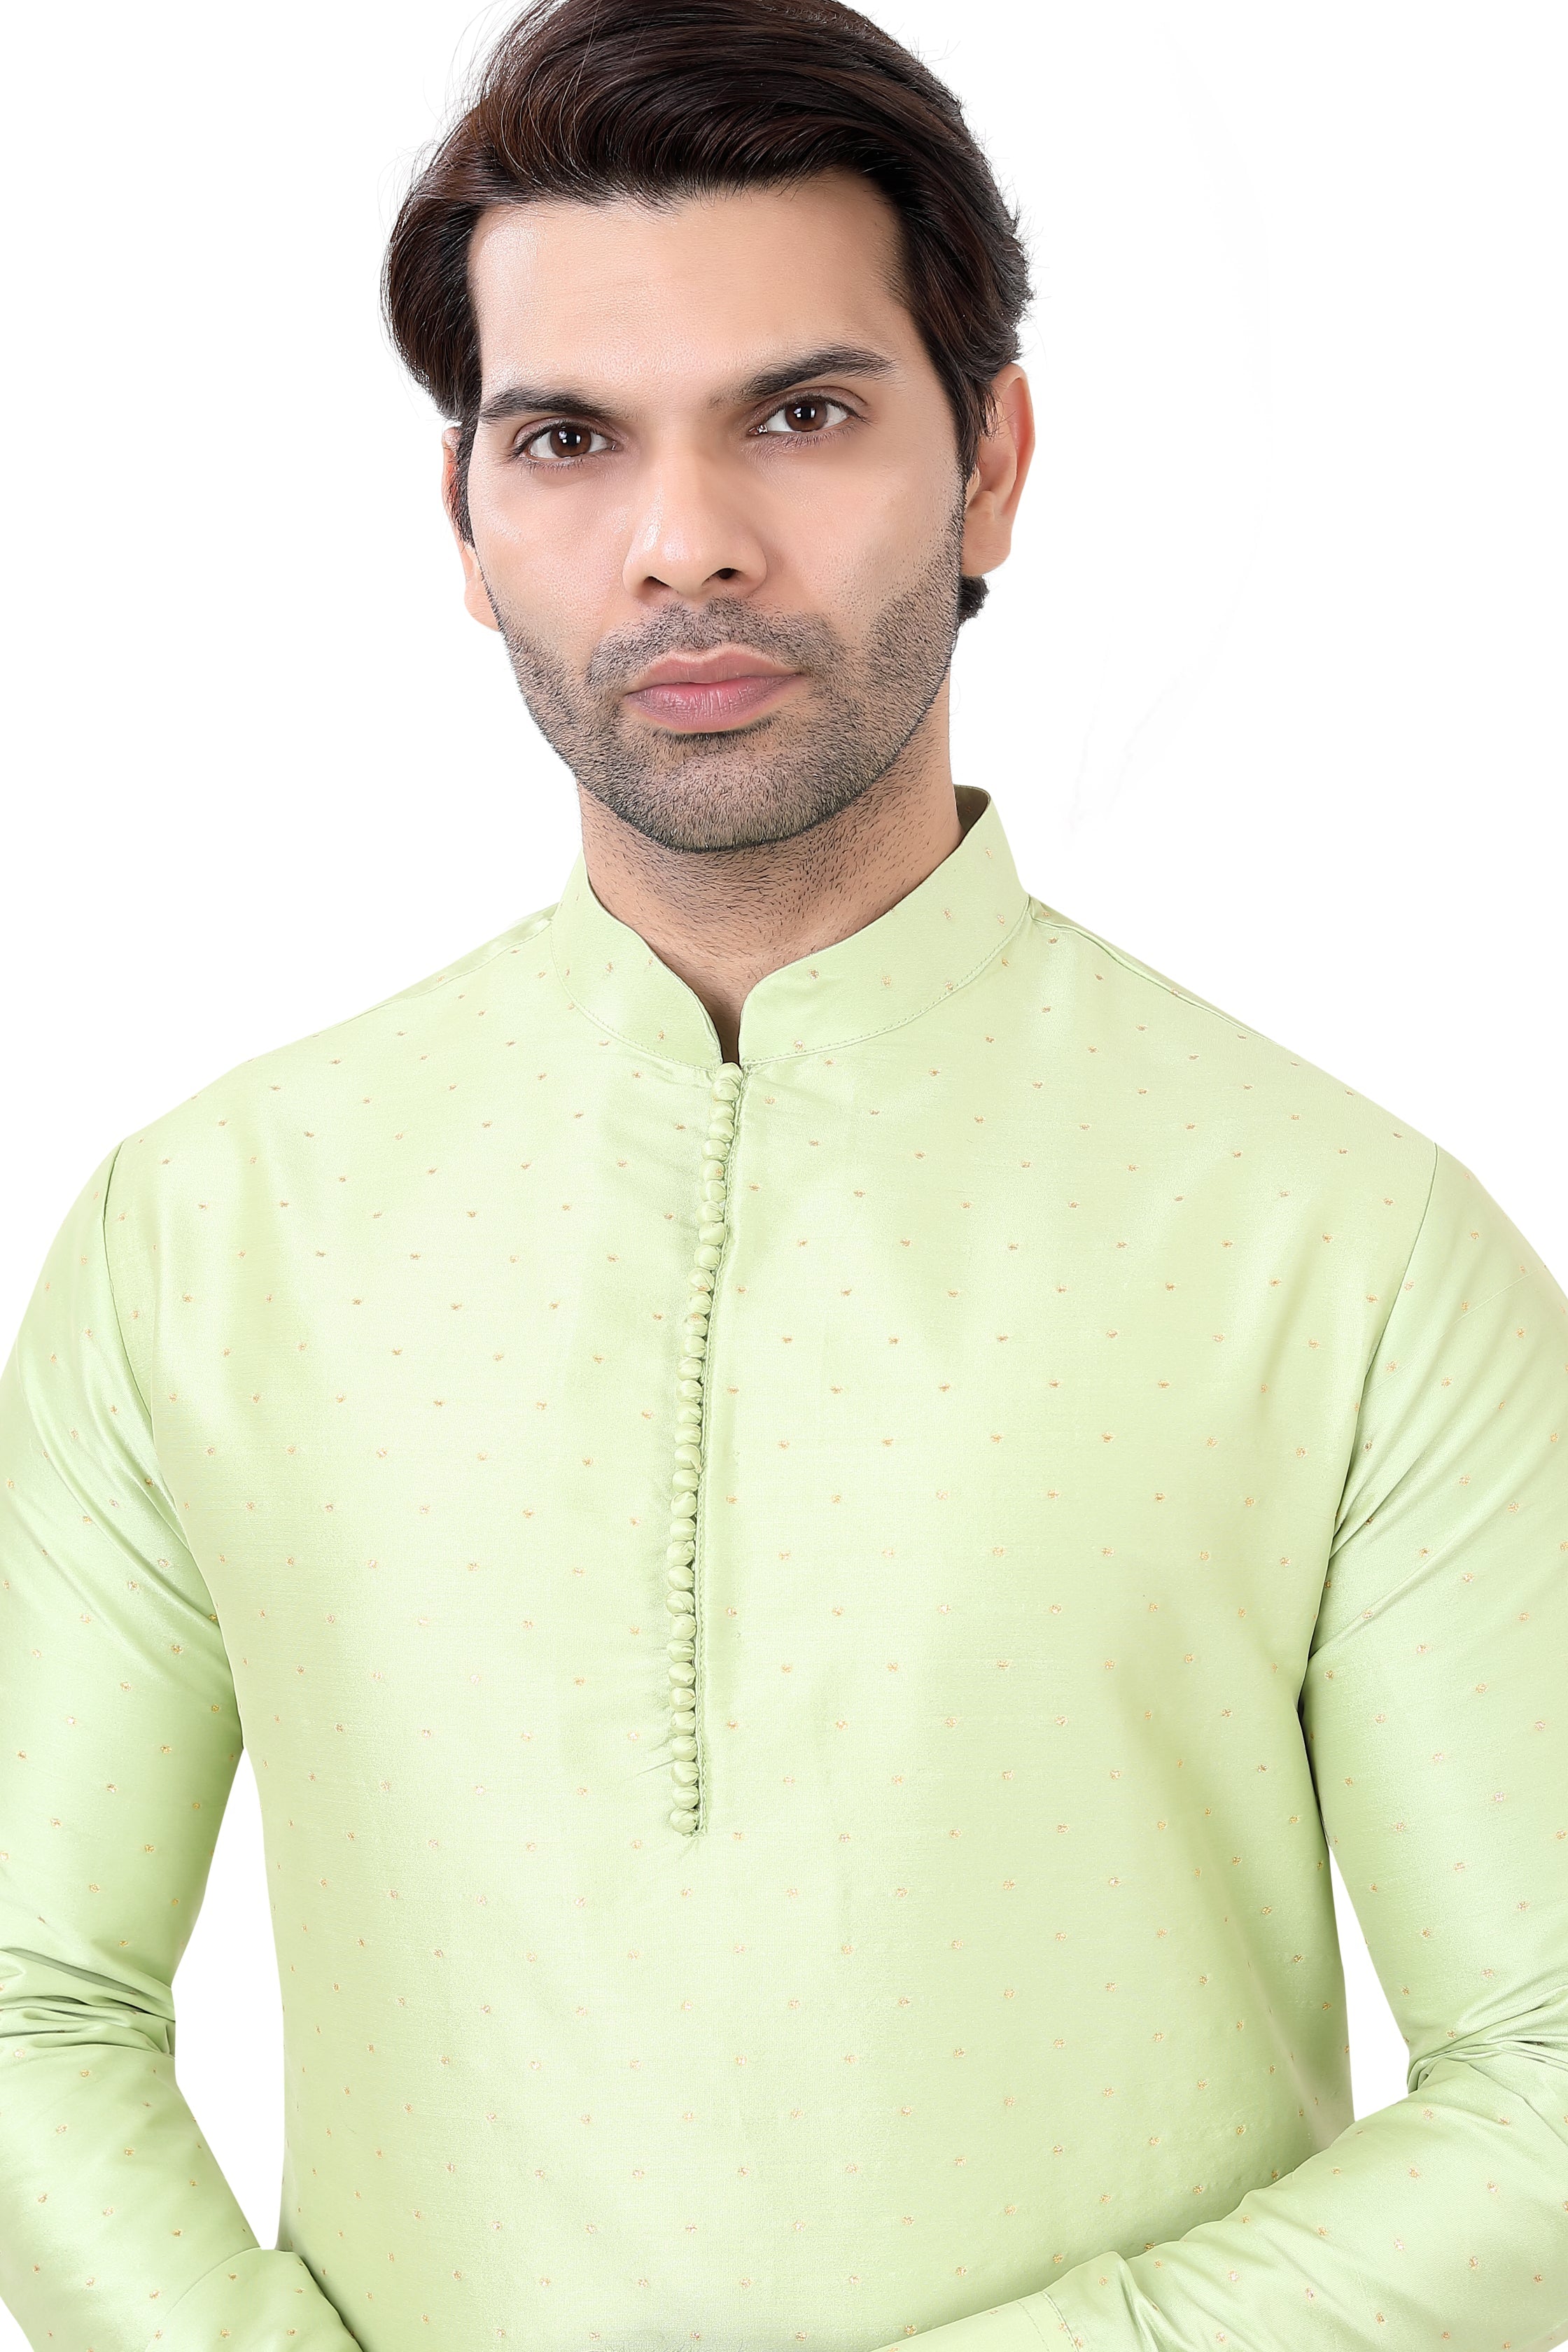 Plus Size Silk Kurta Pajama in Pista Green - Premium kurta pajama from Dapper Ethnic - Just $75! Shop now at Dulhan Exclusives